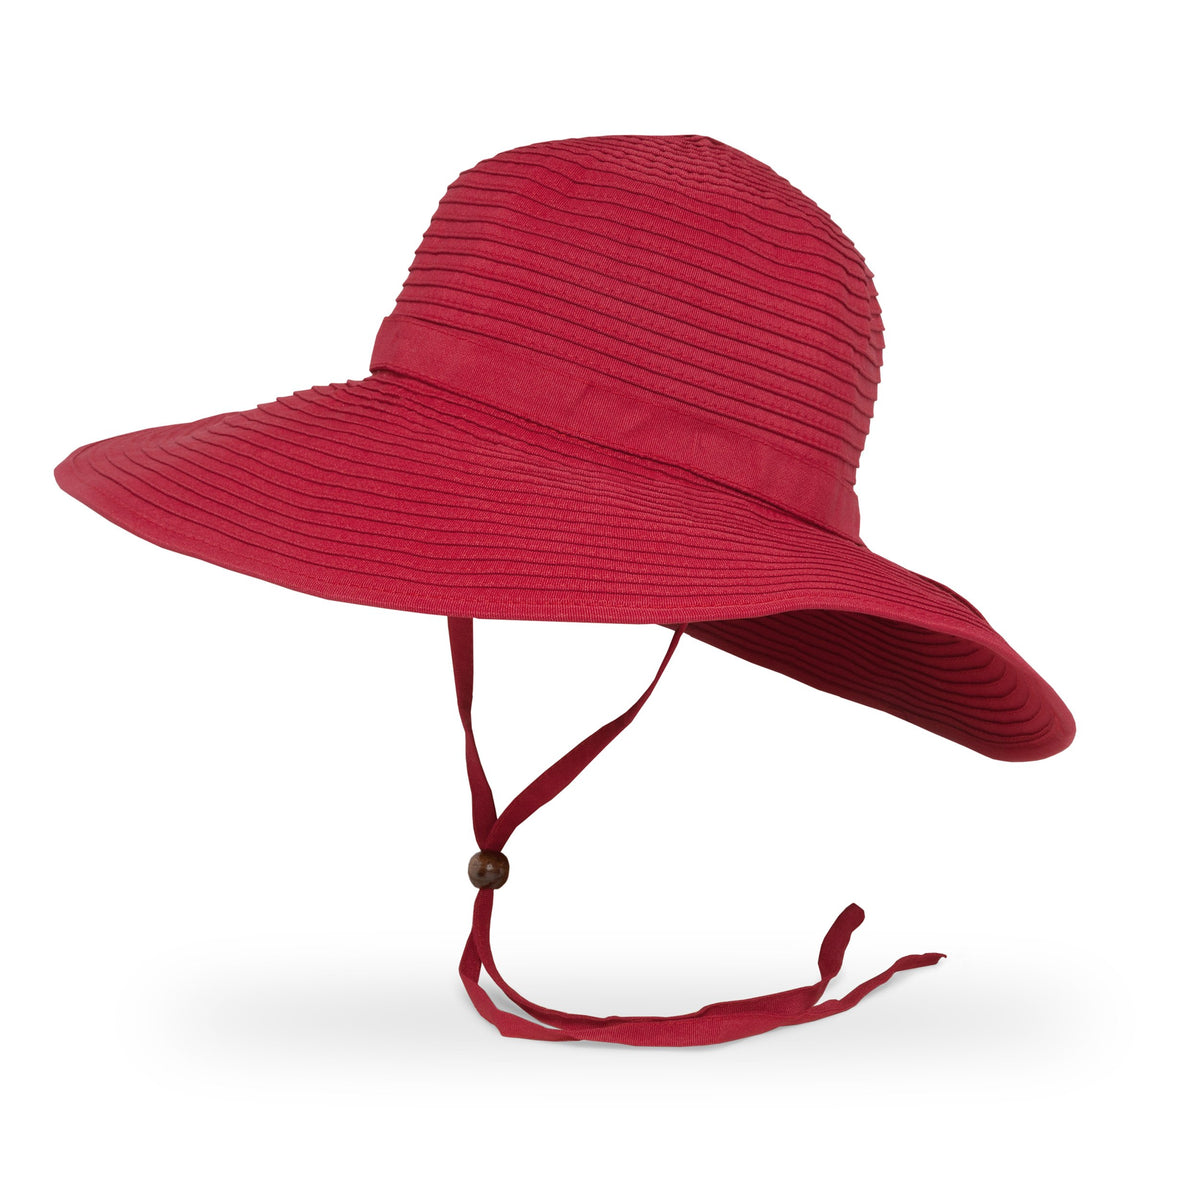 Sunday Afternoons Women's Beach Hat, Grapefruit